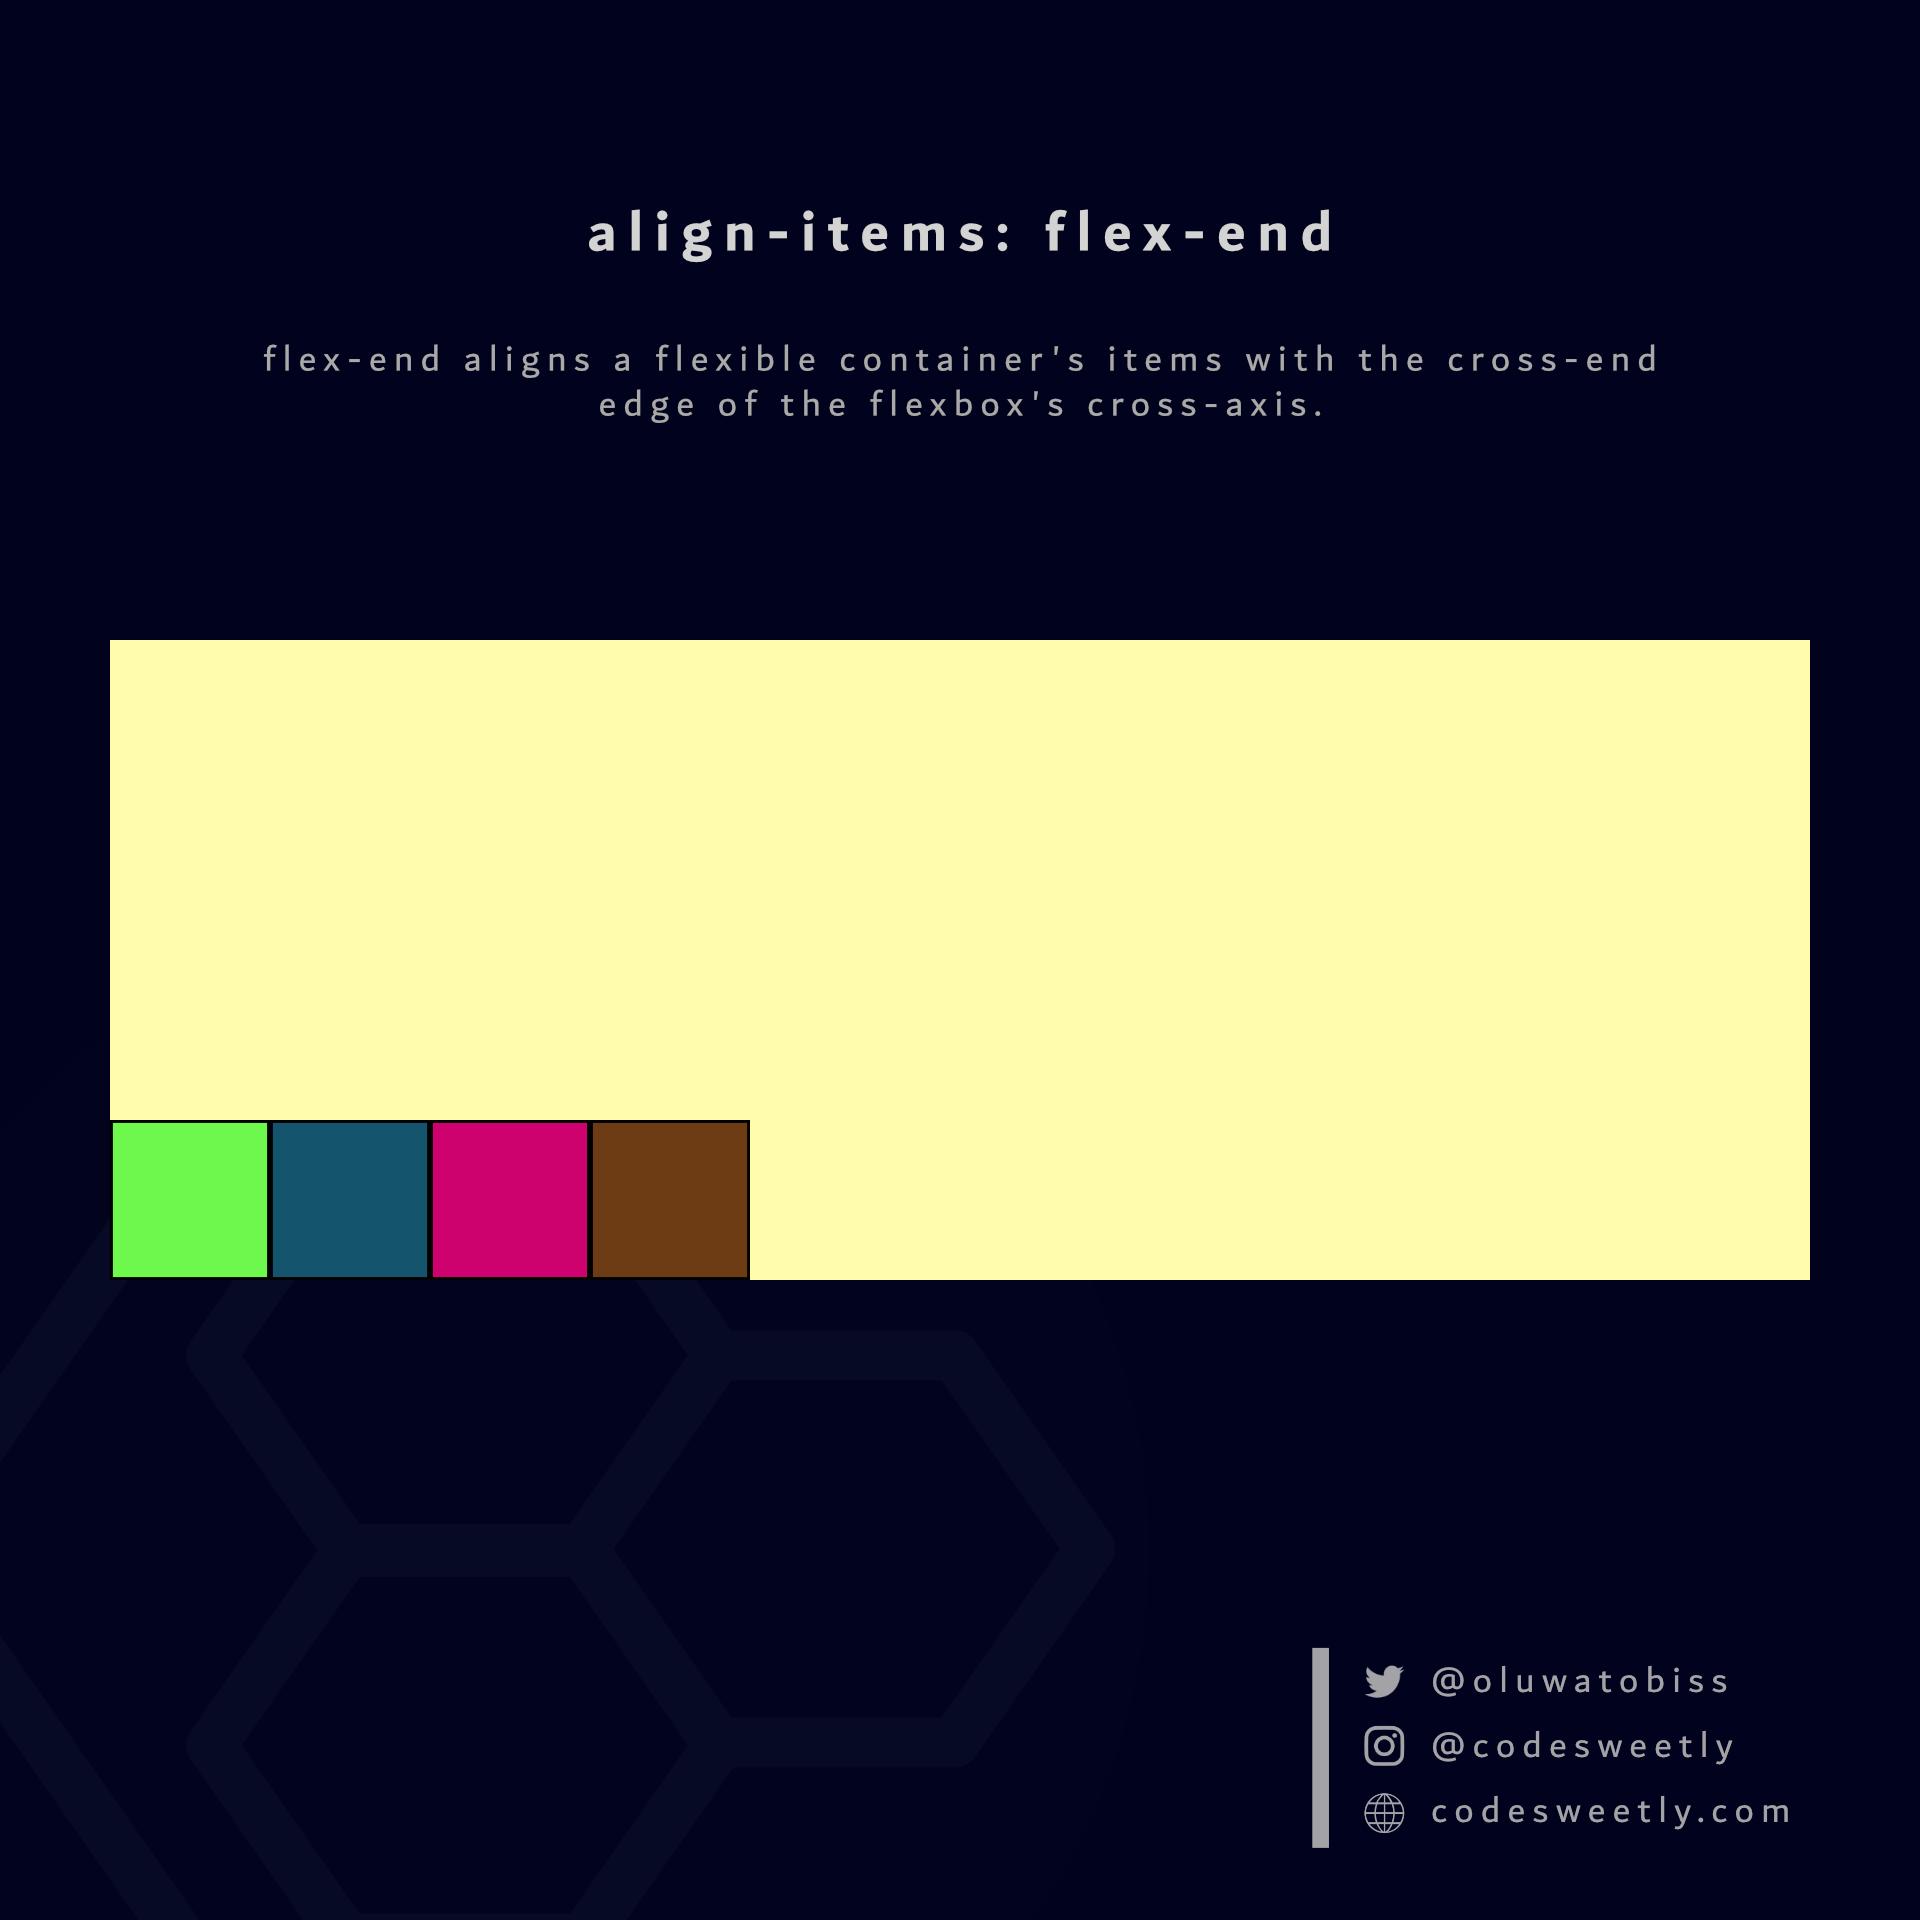 Illustration of align-items' flex-end value